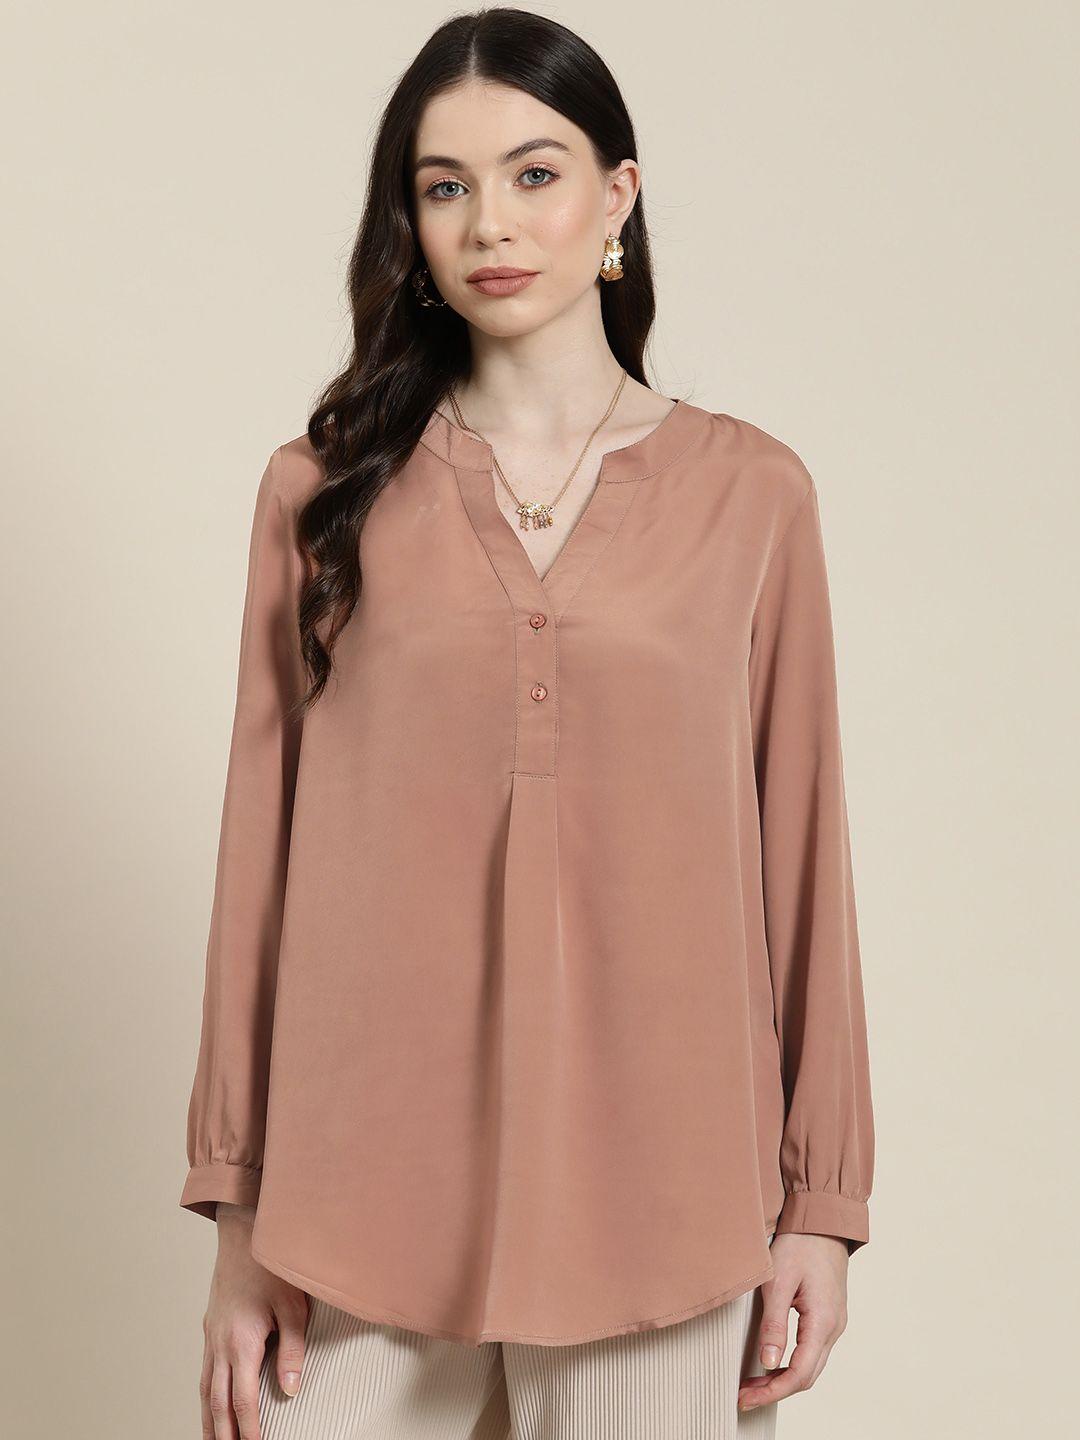 qurvii women comfort opaque casual shirt